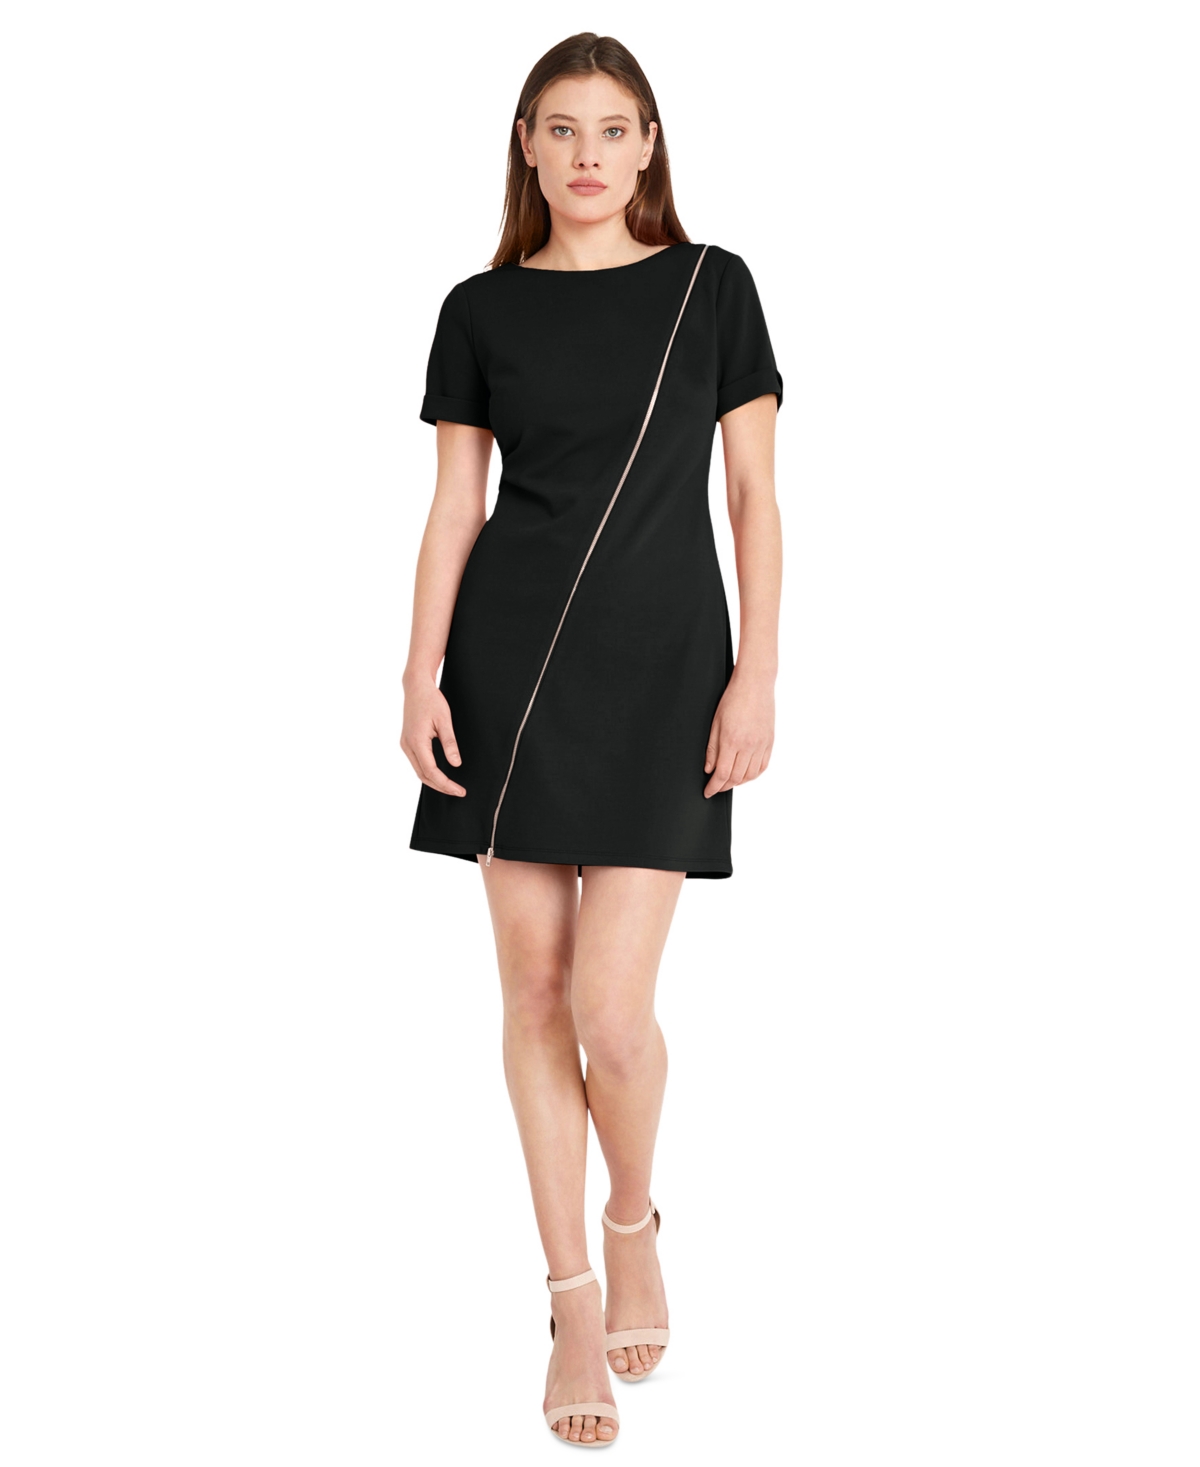 Women's Jewel-Neck Exposed-Zipper Mini Dress - Black